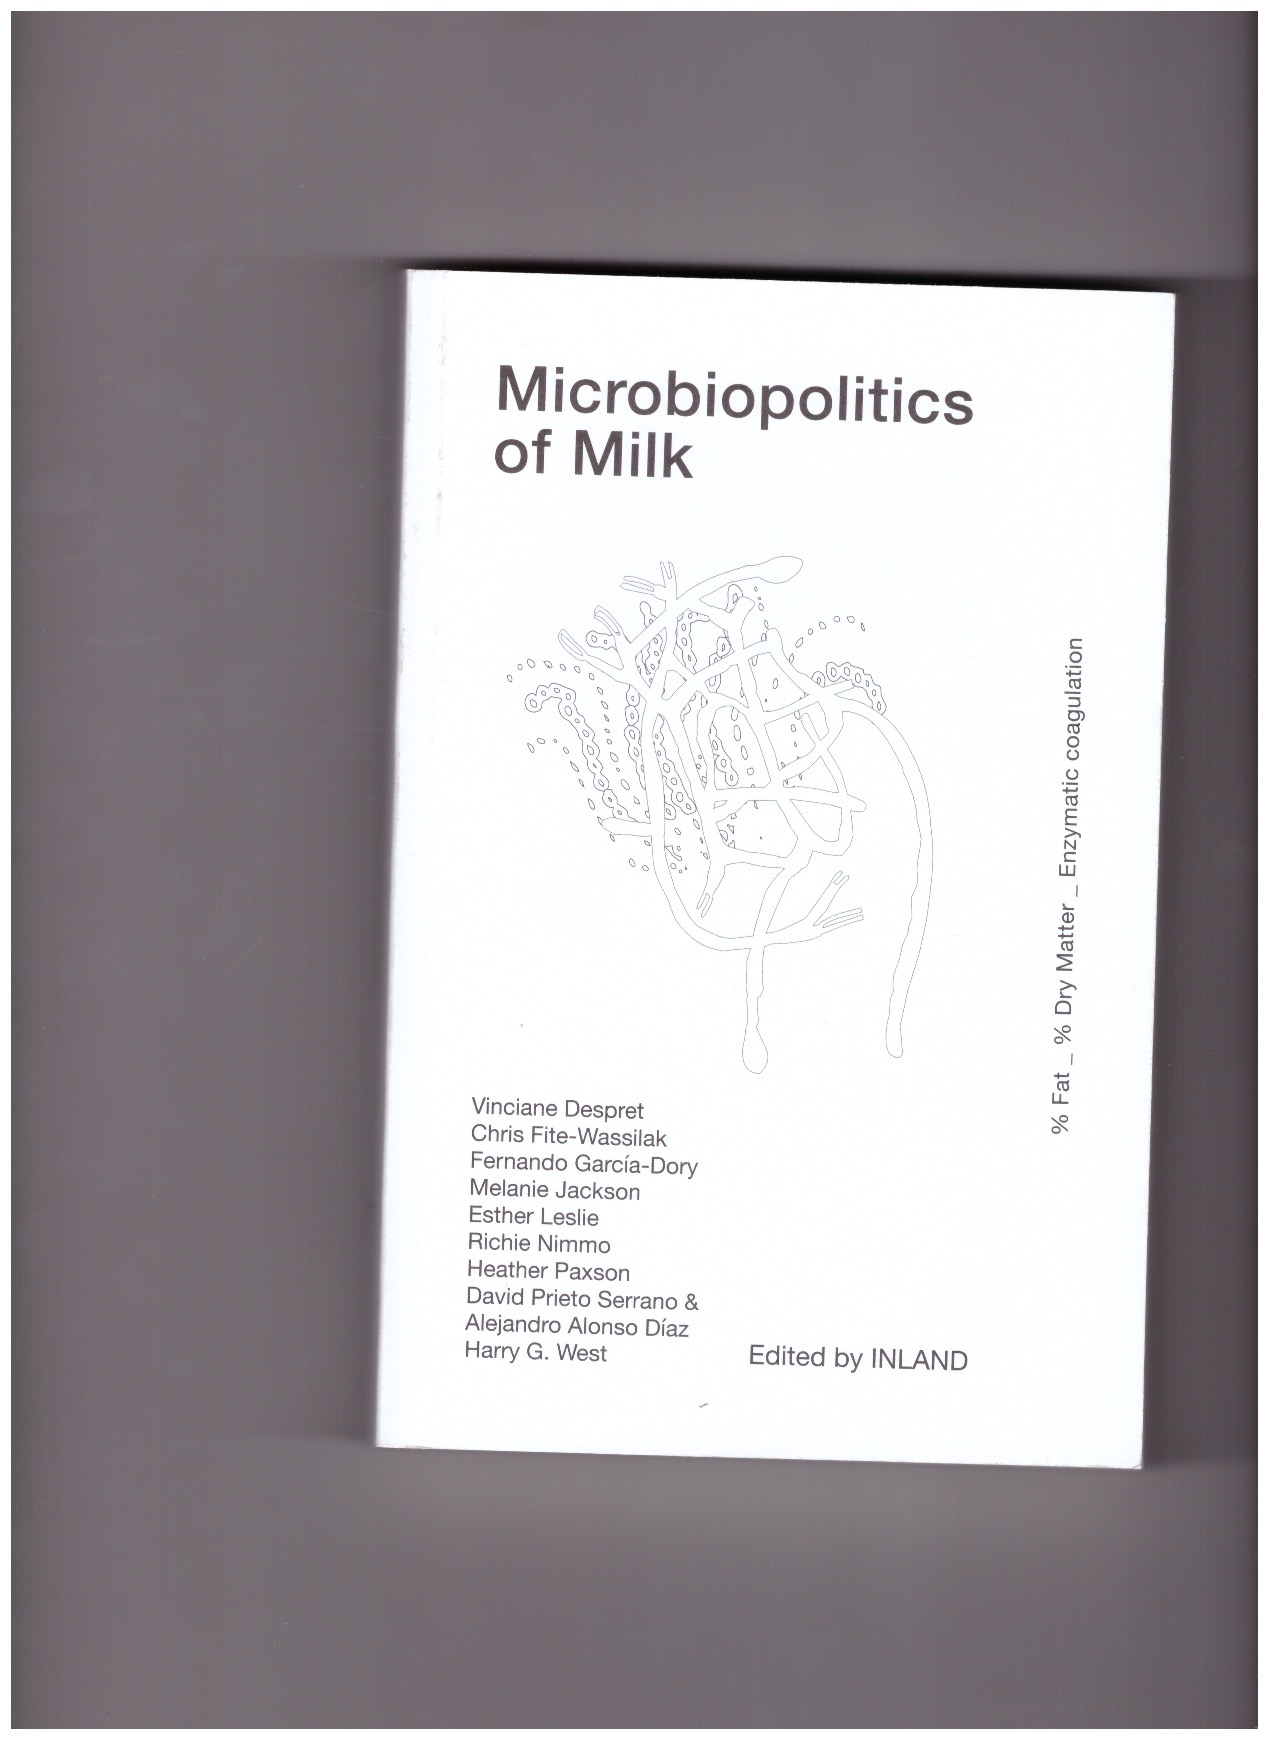 INLAND (ed.) - Microbiopolitics of Milk